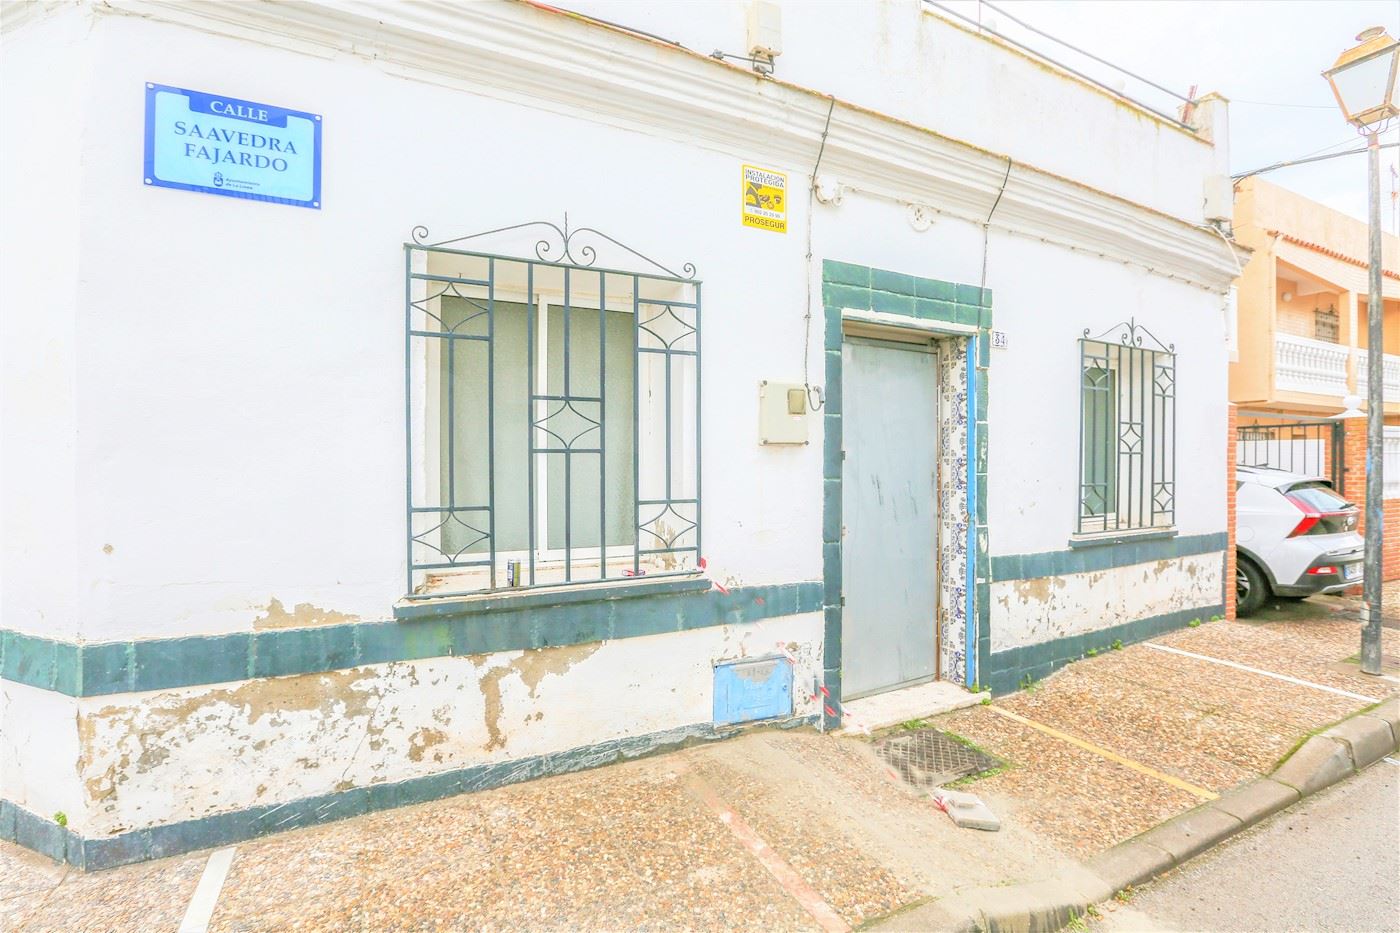 Calle Saavedra Fajardo, La Línea de la Concepción, Cádiz 1/25